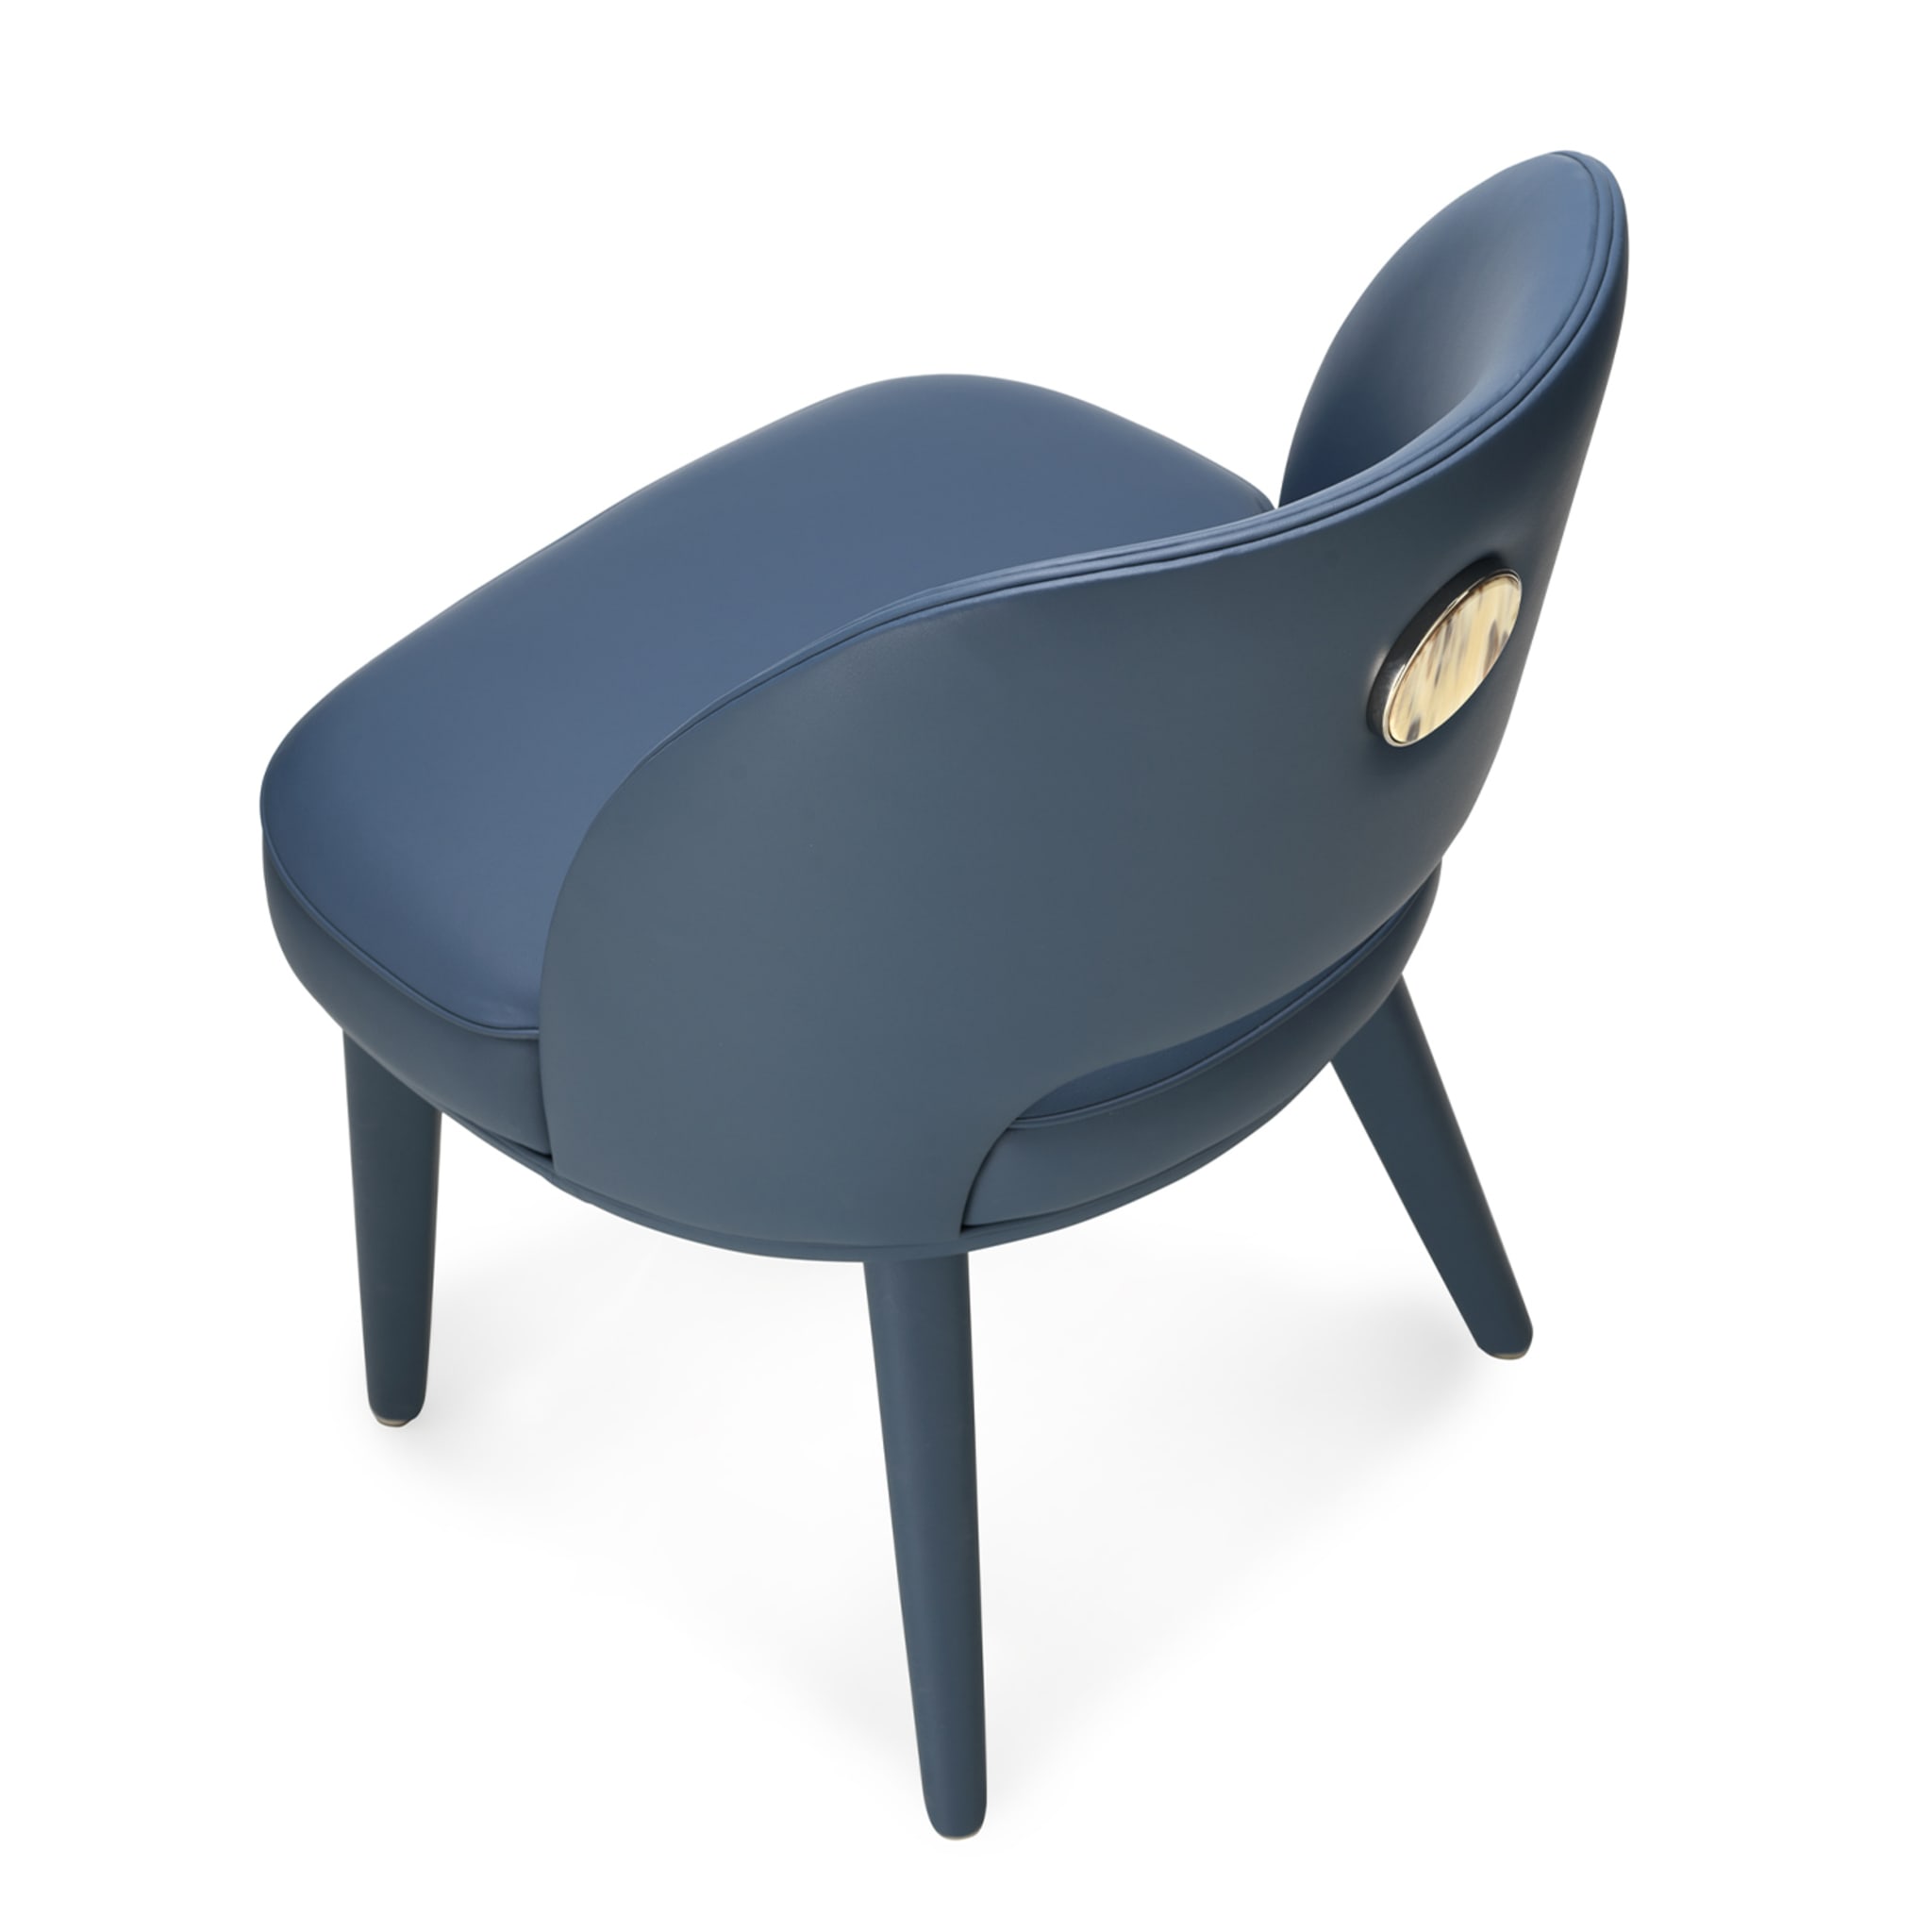 PENELOPE blue chair - Alternative view 3